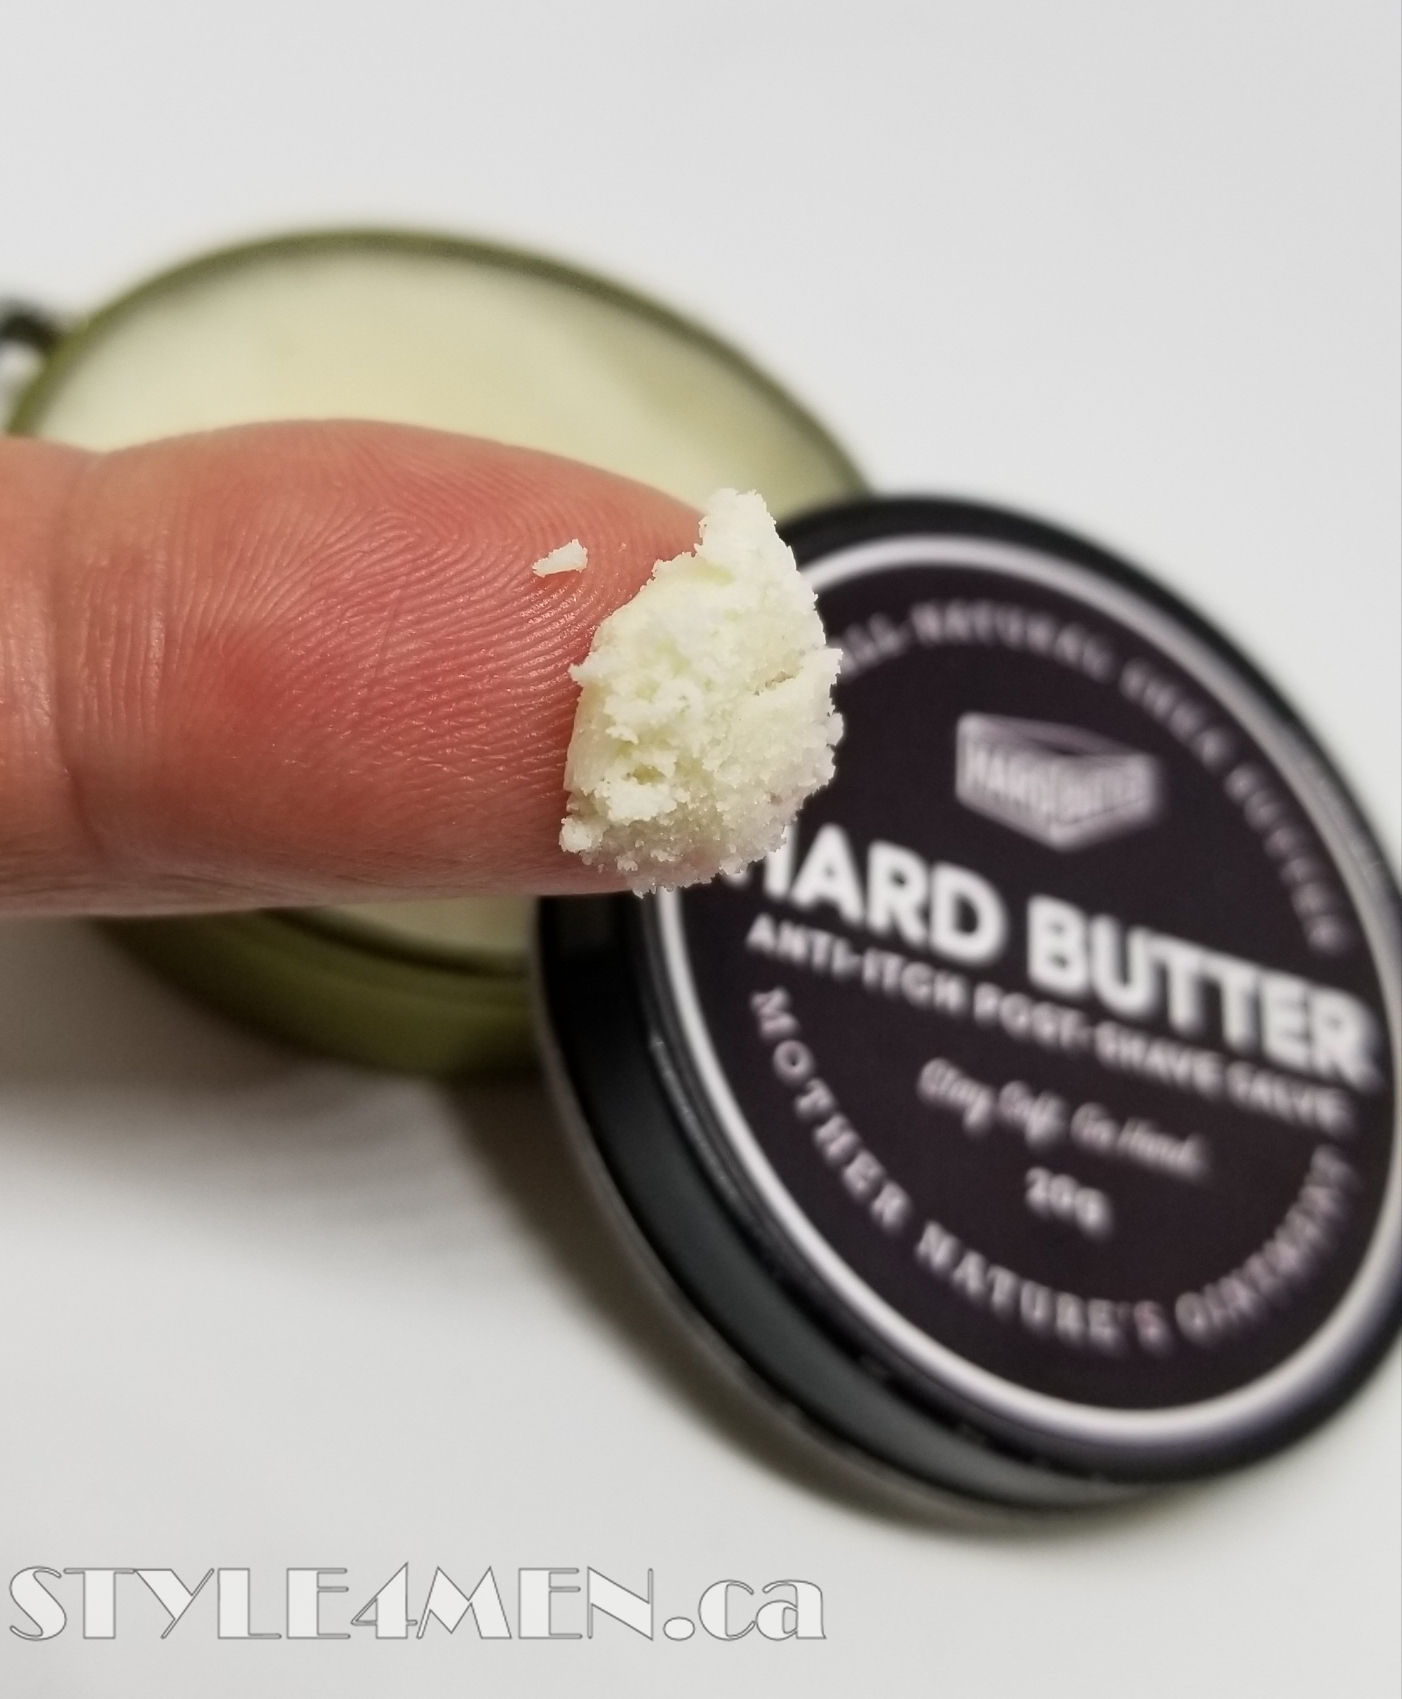 Hard Butter Post-Shave